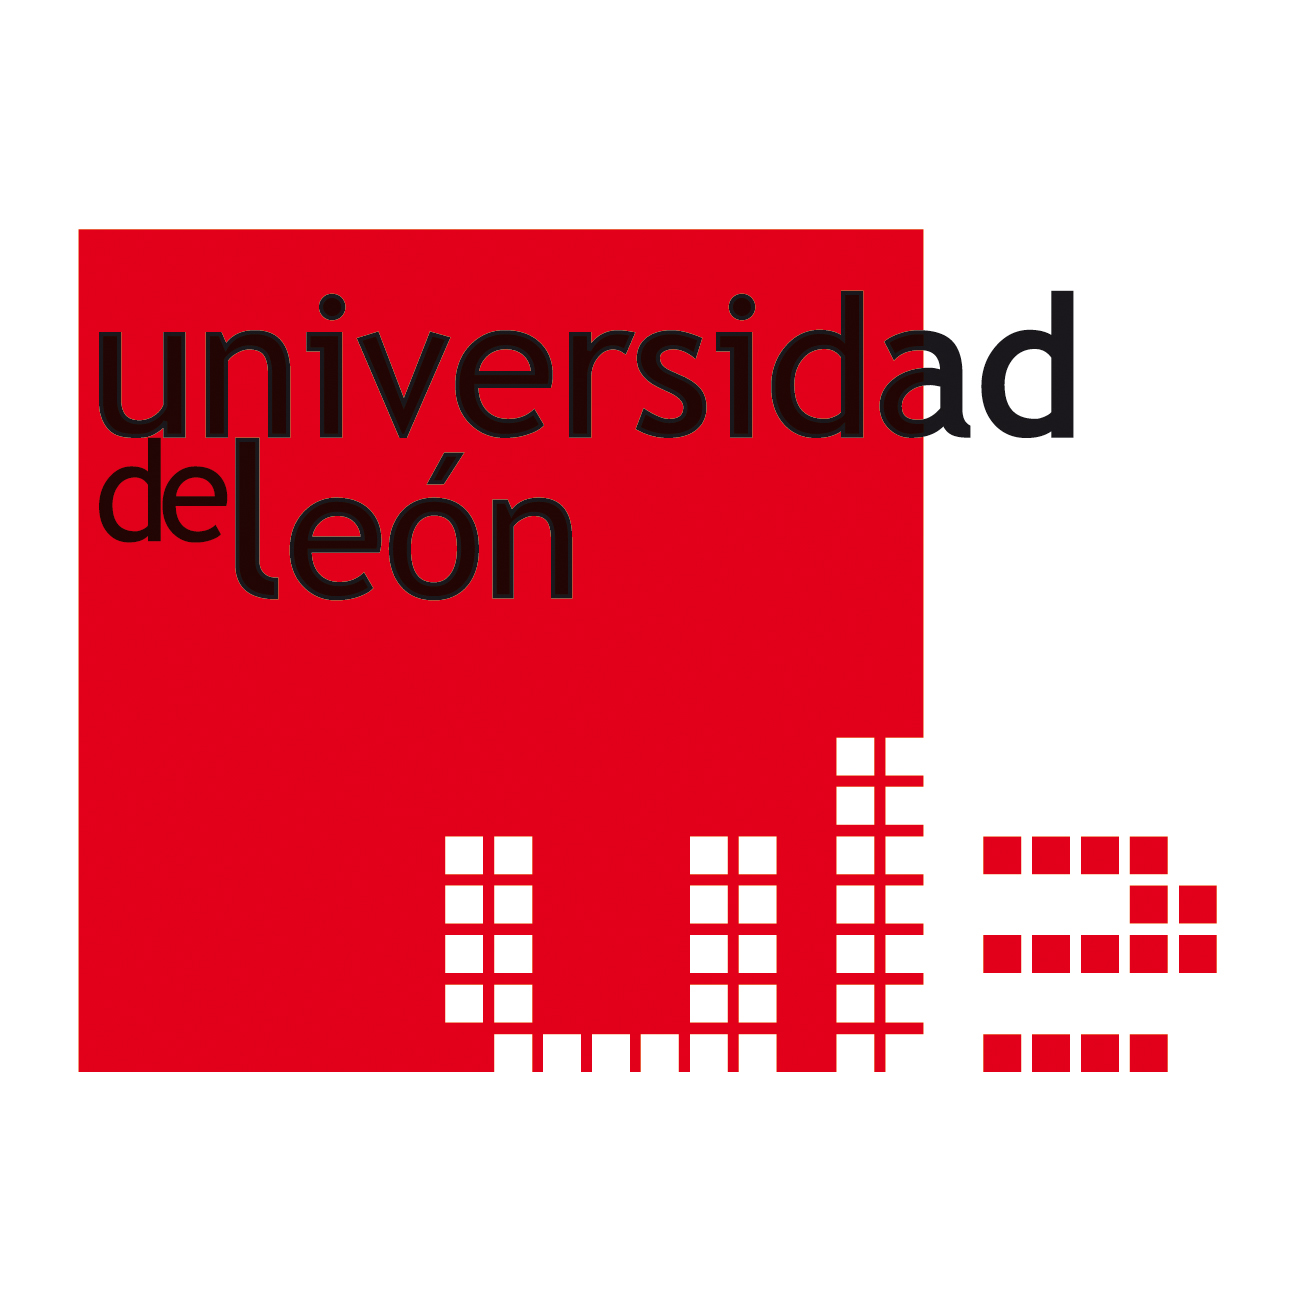 University de Leon